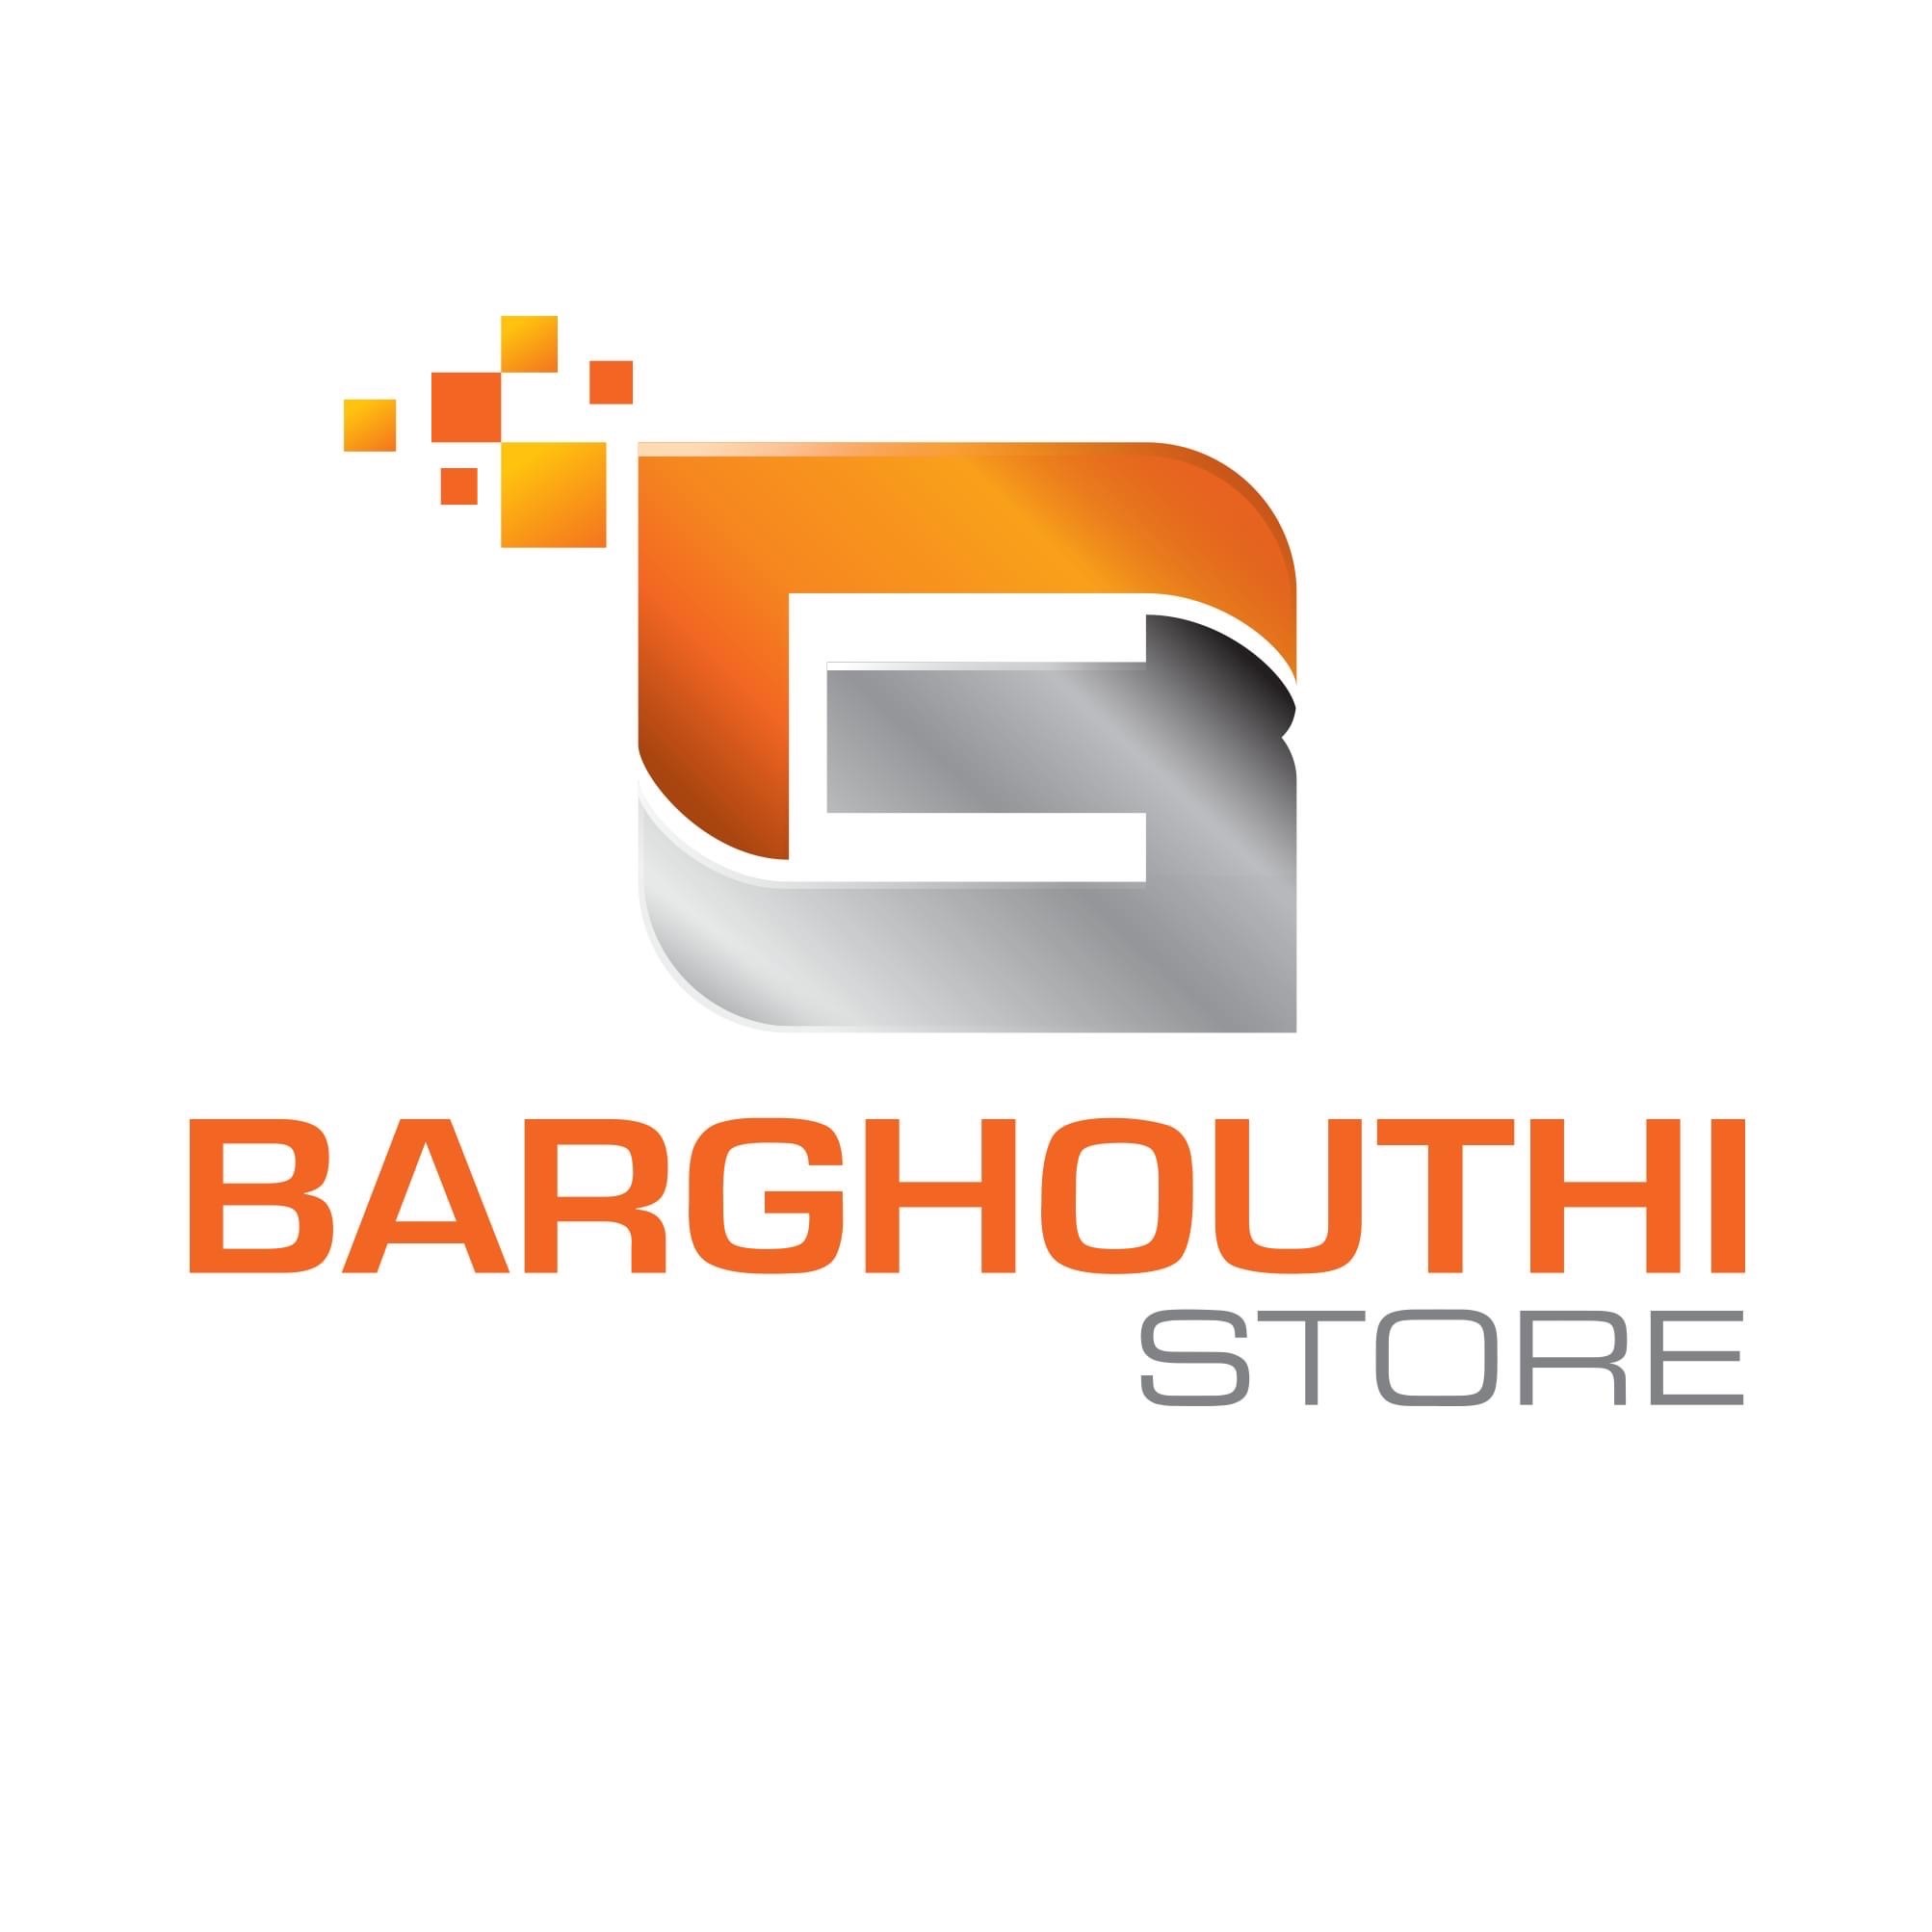 Barghouthi Store